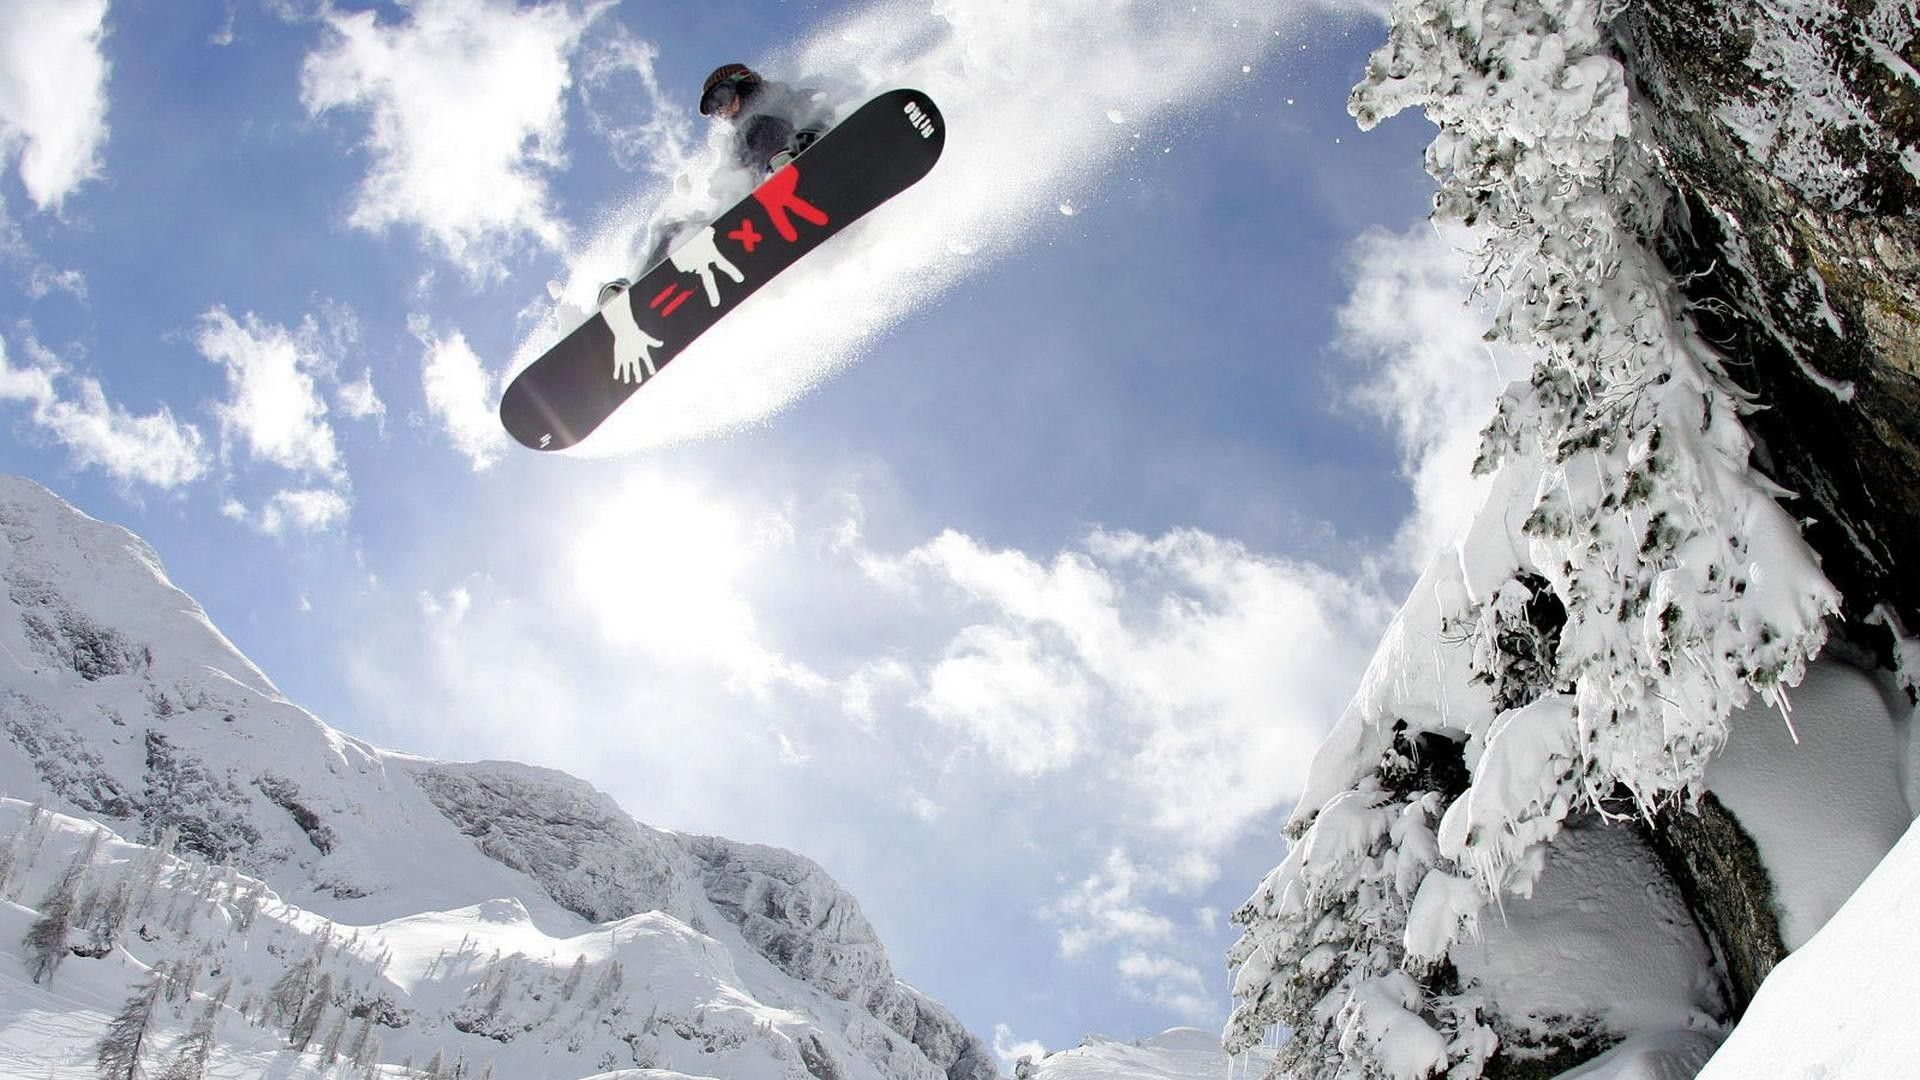 Snow sports snowboarding skiing snowboard wallpaperx1080